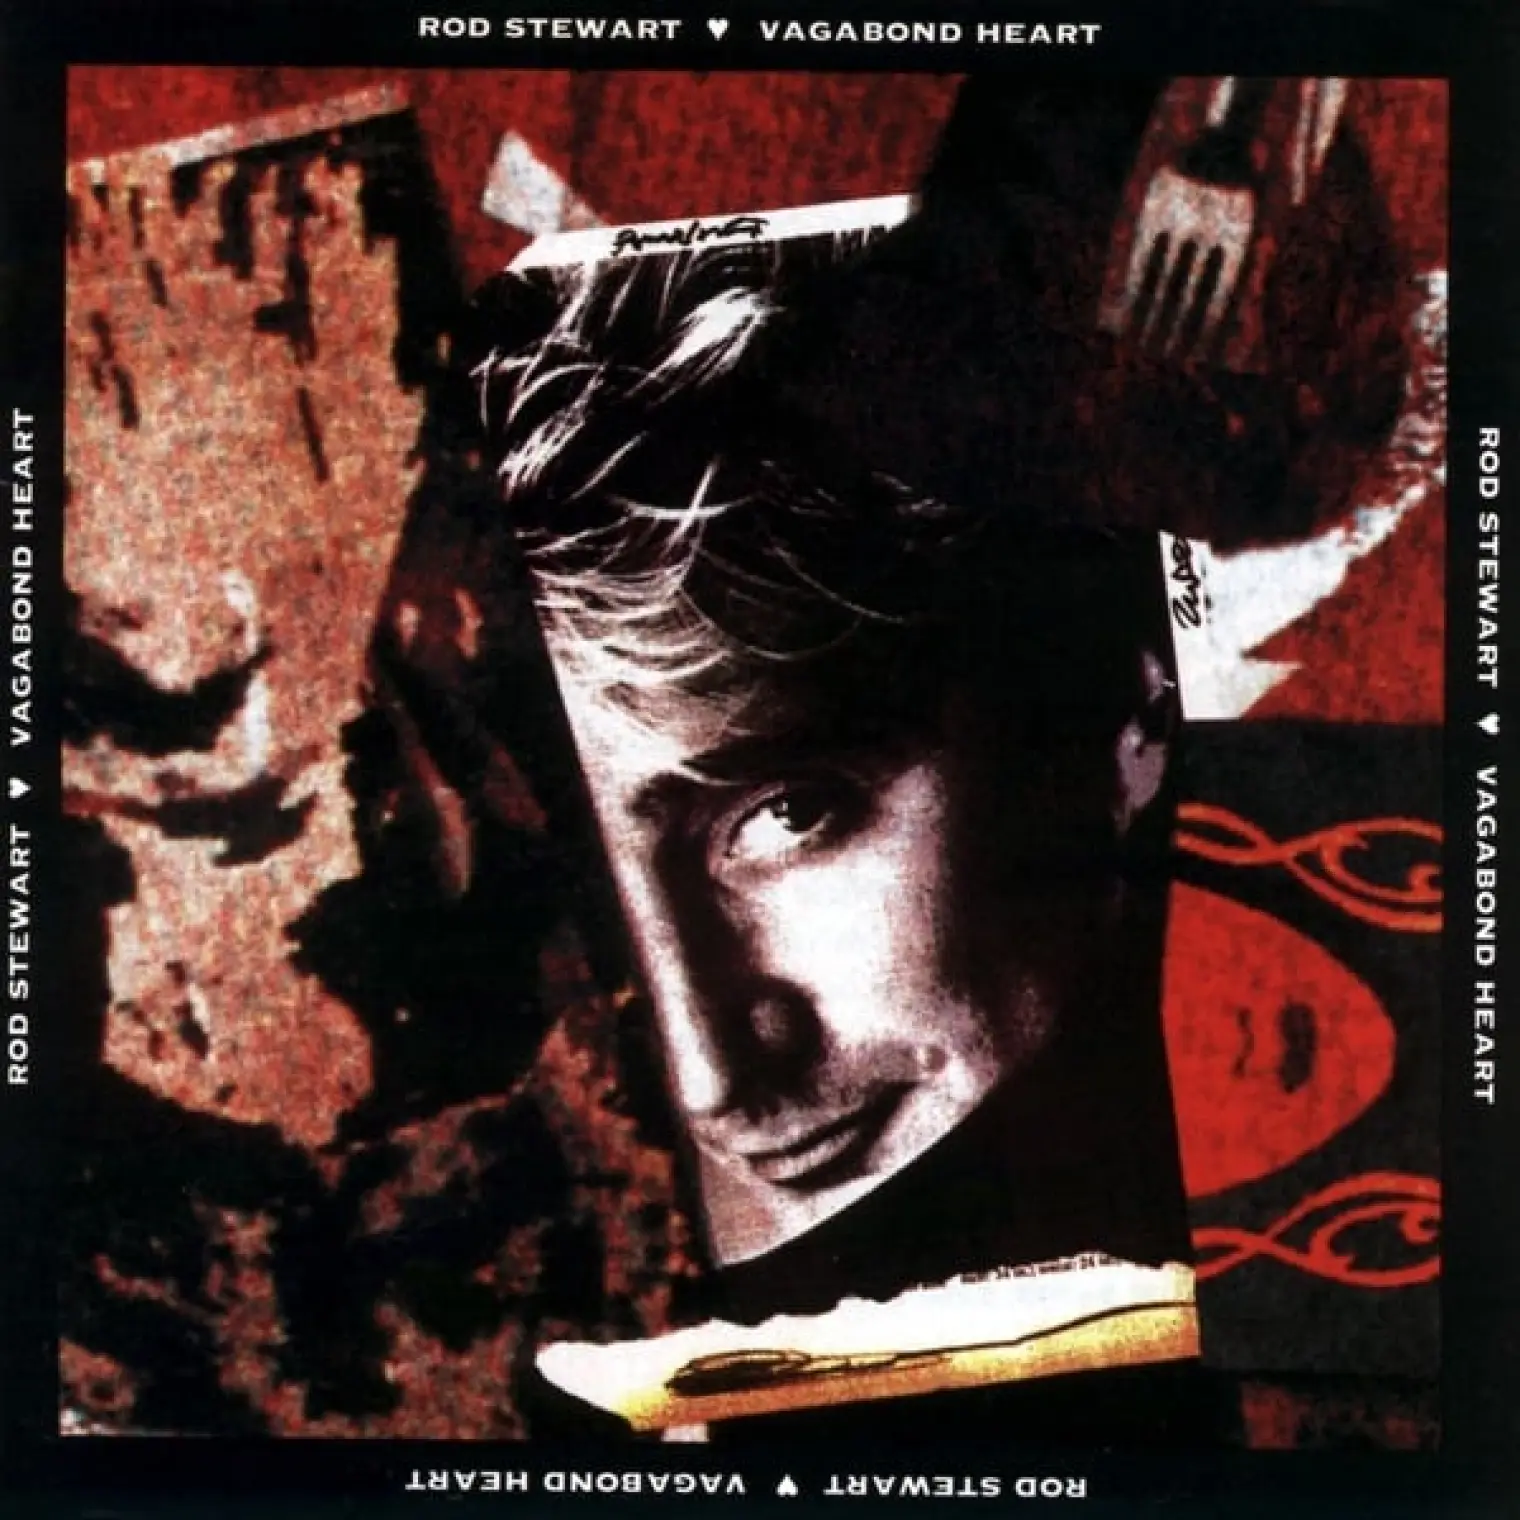 Vagabond Heart (Expanded Edition) -  Rod Stewart 